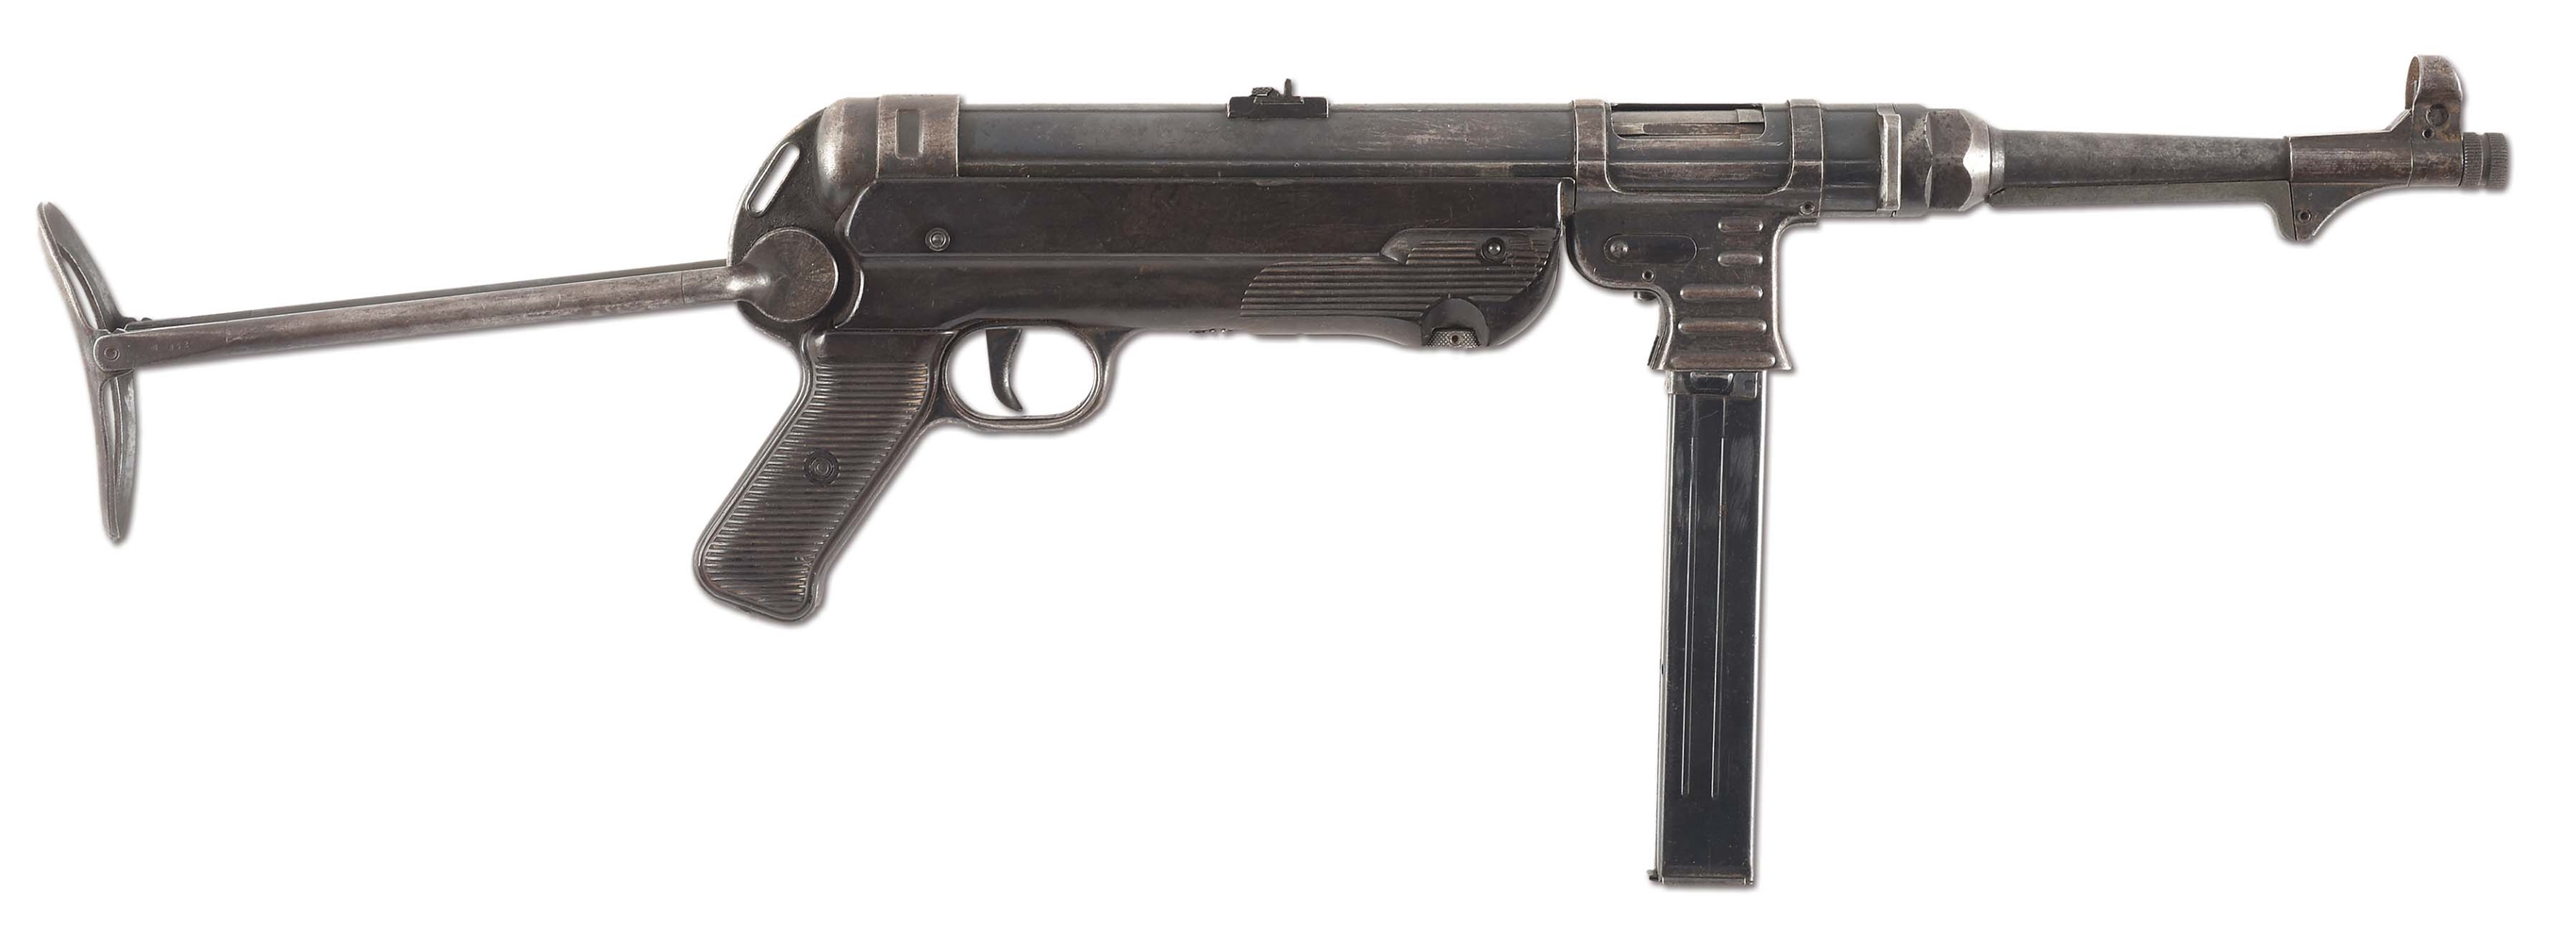 (N) FINE ORIGINAL ERMA MANUFACTURED GERMAN WORLD WAR II MP-40 MACHINE GUN (CURIO AND RELIC)